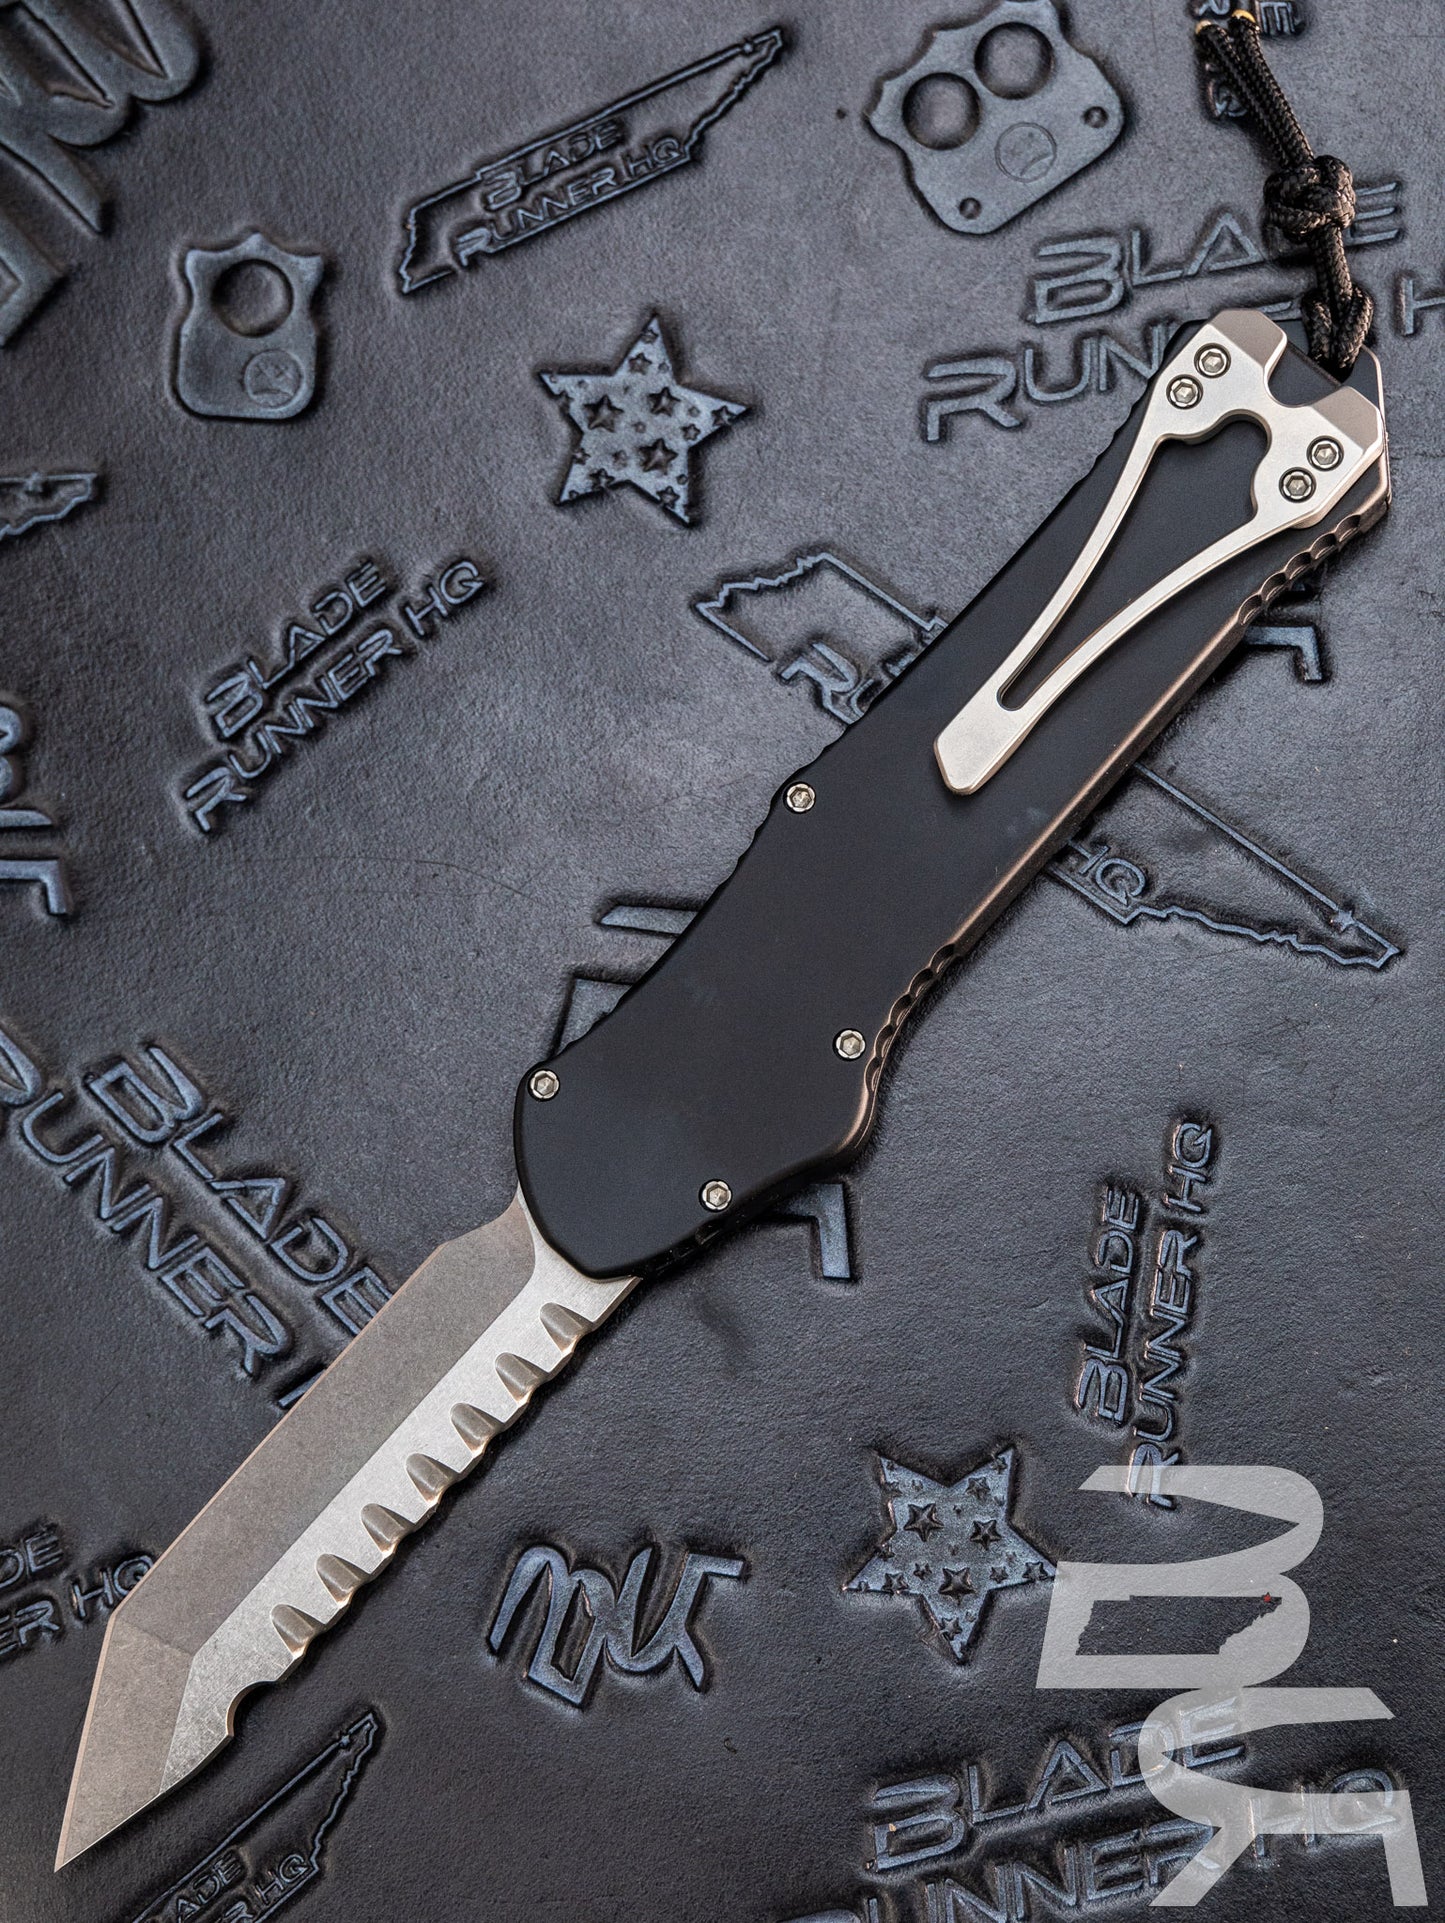 HERETIC KNIVES HYDRA OTF AUTOMATIC KNIFE 3.6" TANTO STONEWASH